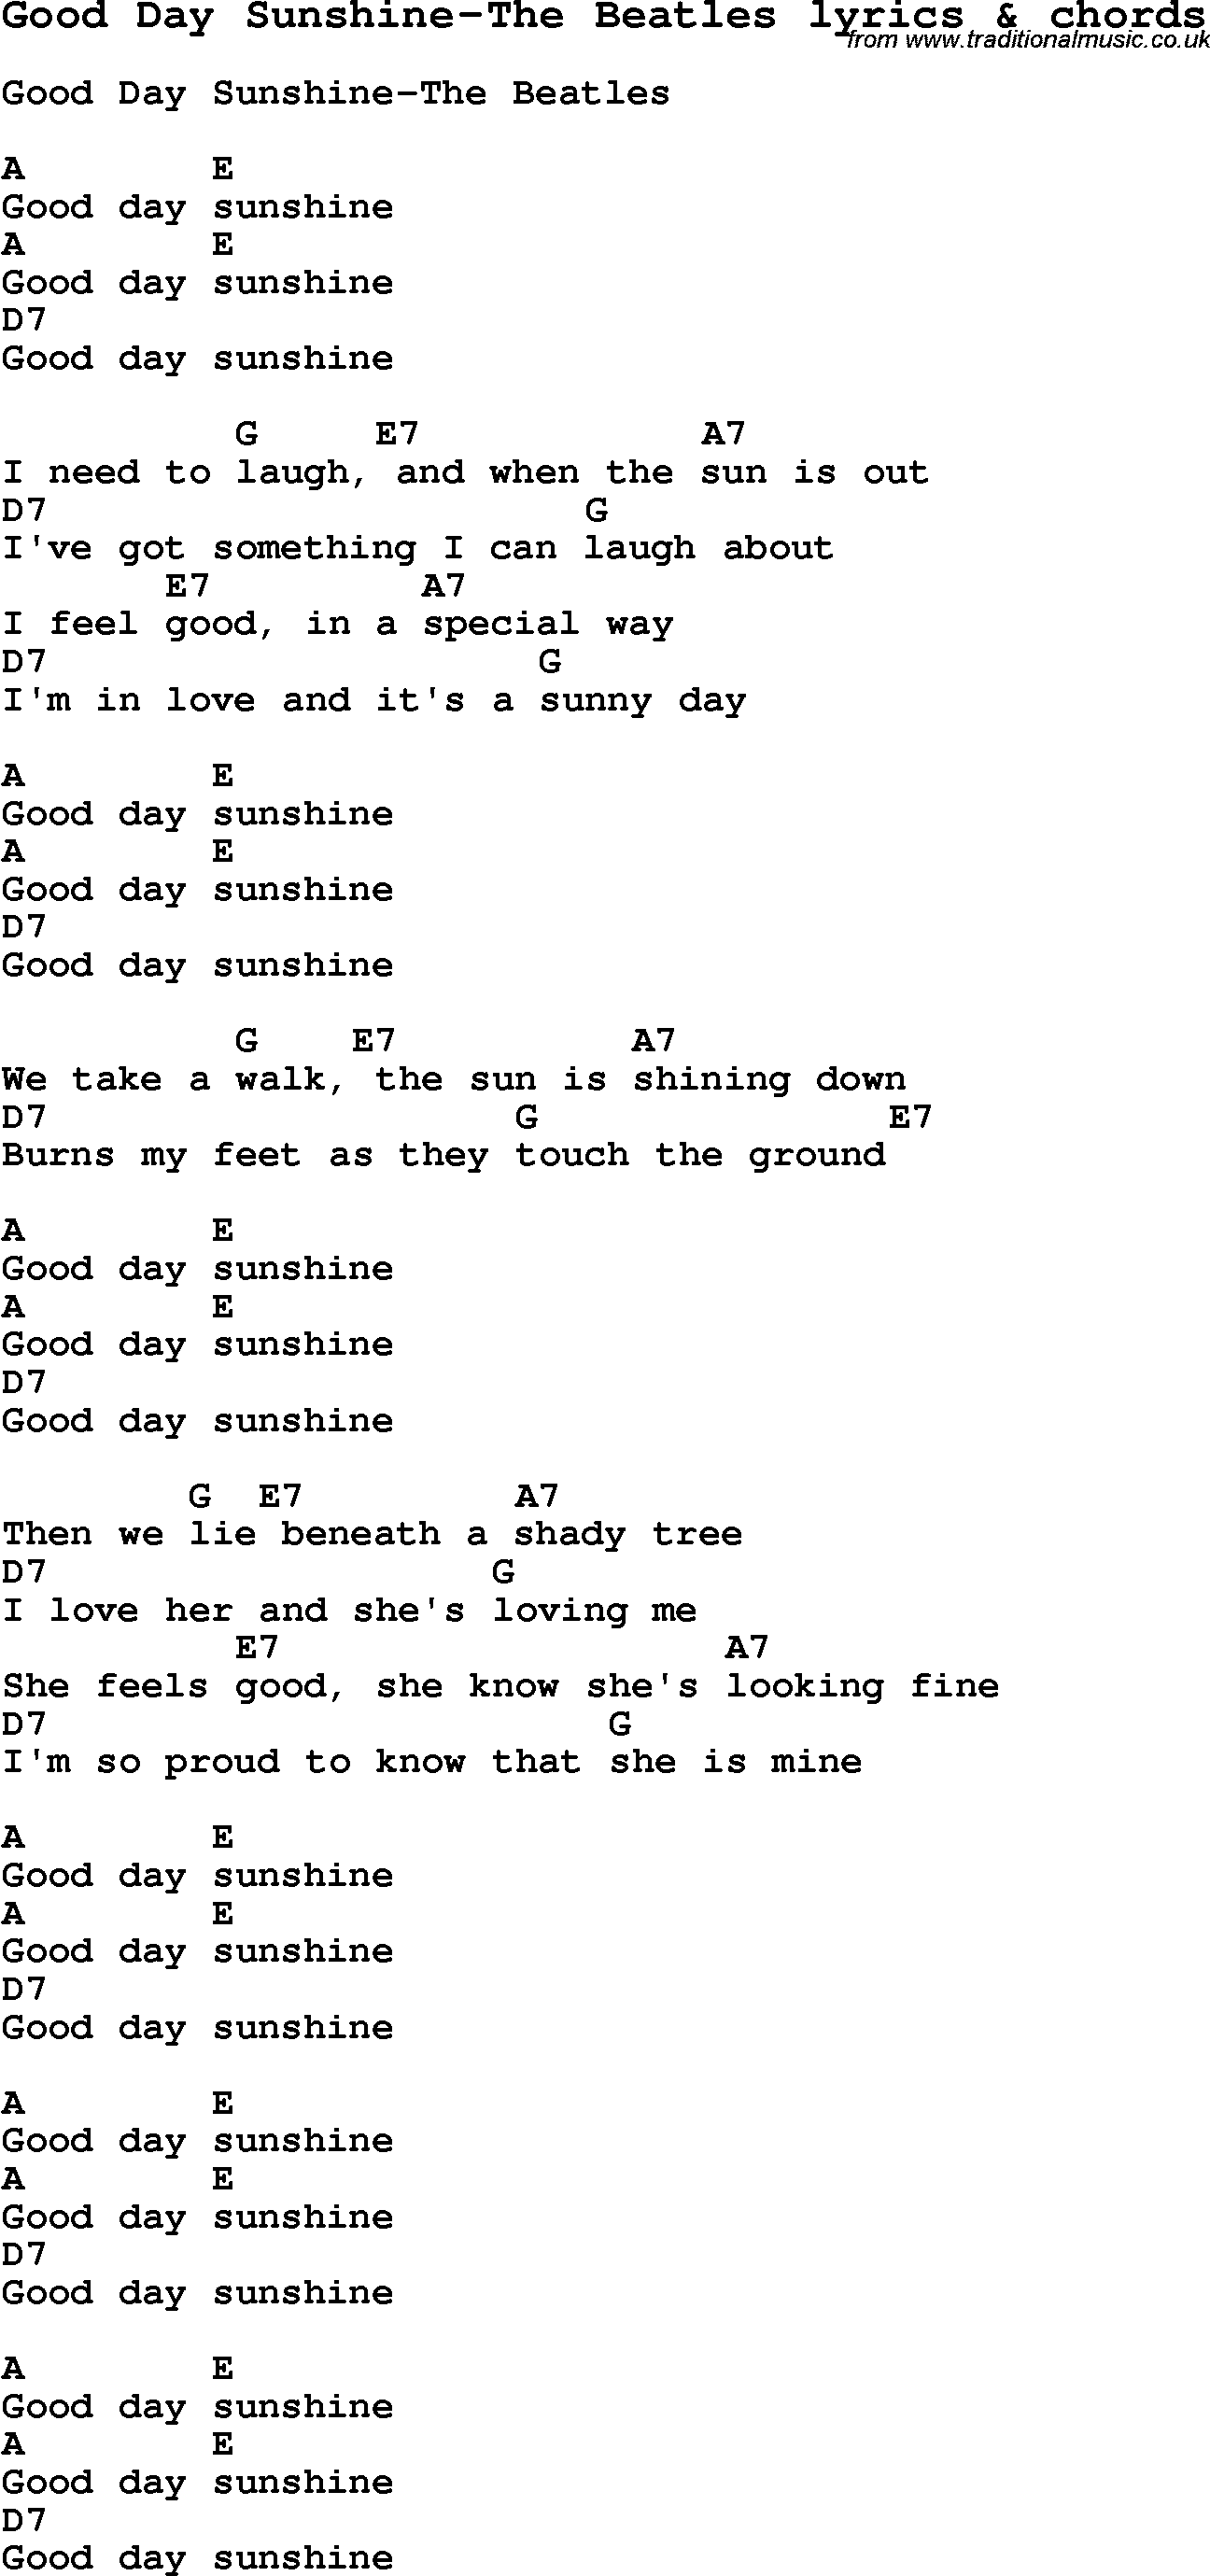 Love Song Lyrics for: Good Day Sunshine-The Beatles with chords for Ukulele, Guitar Banjo etc.